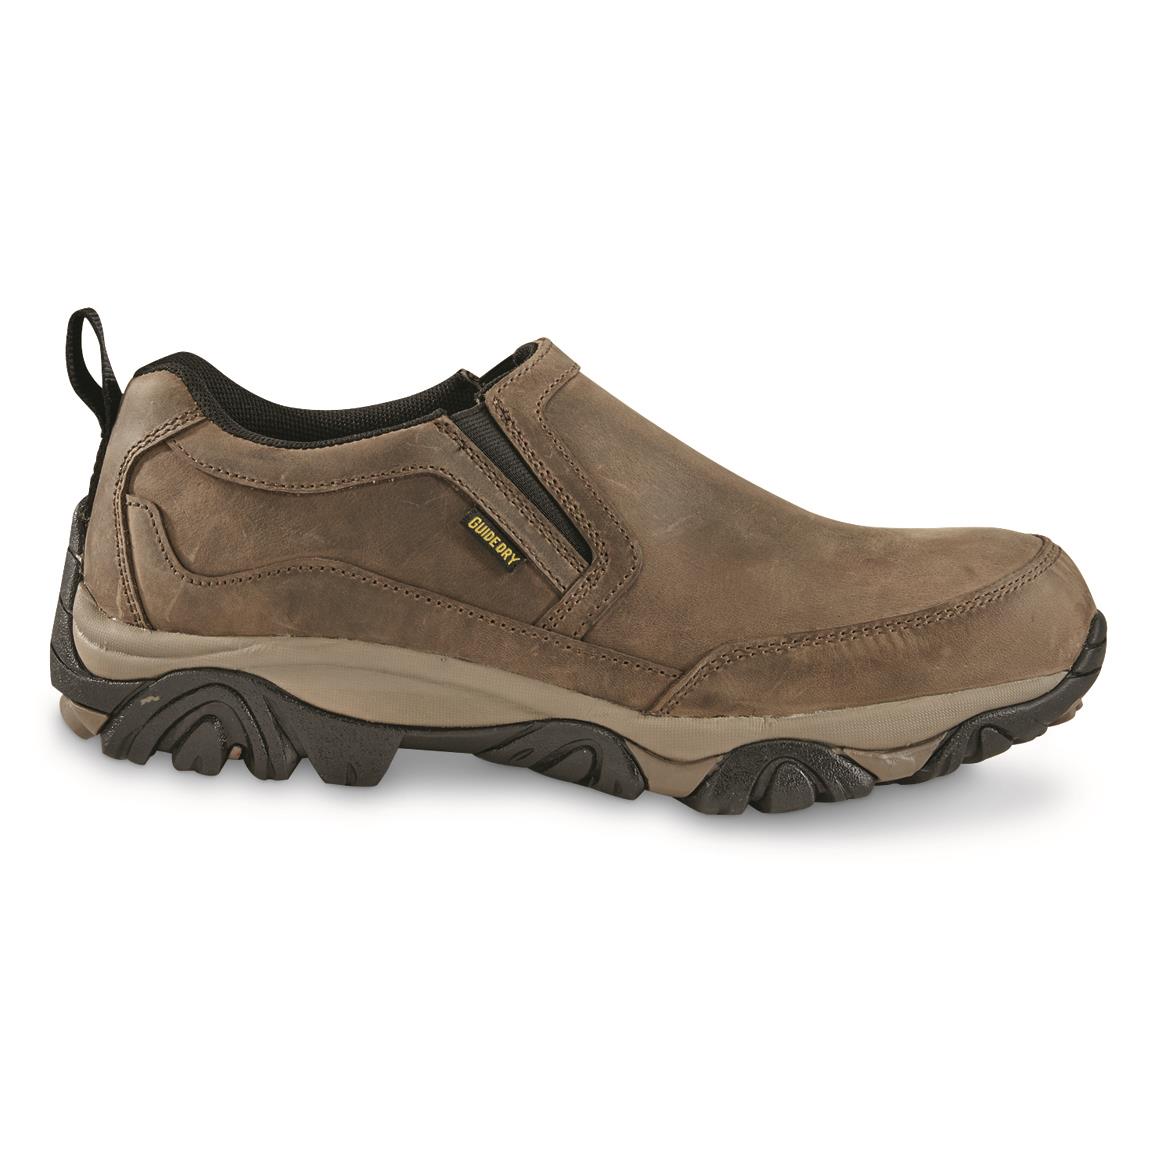 Merrell Men's Moab Adventure Moc Shoes - 698288, Casual Shoes at ...